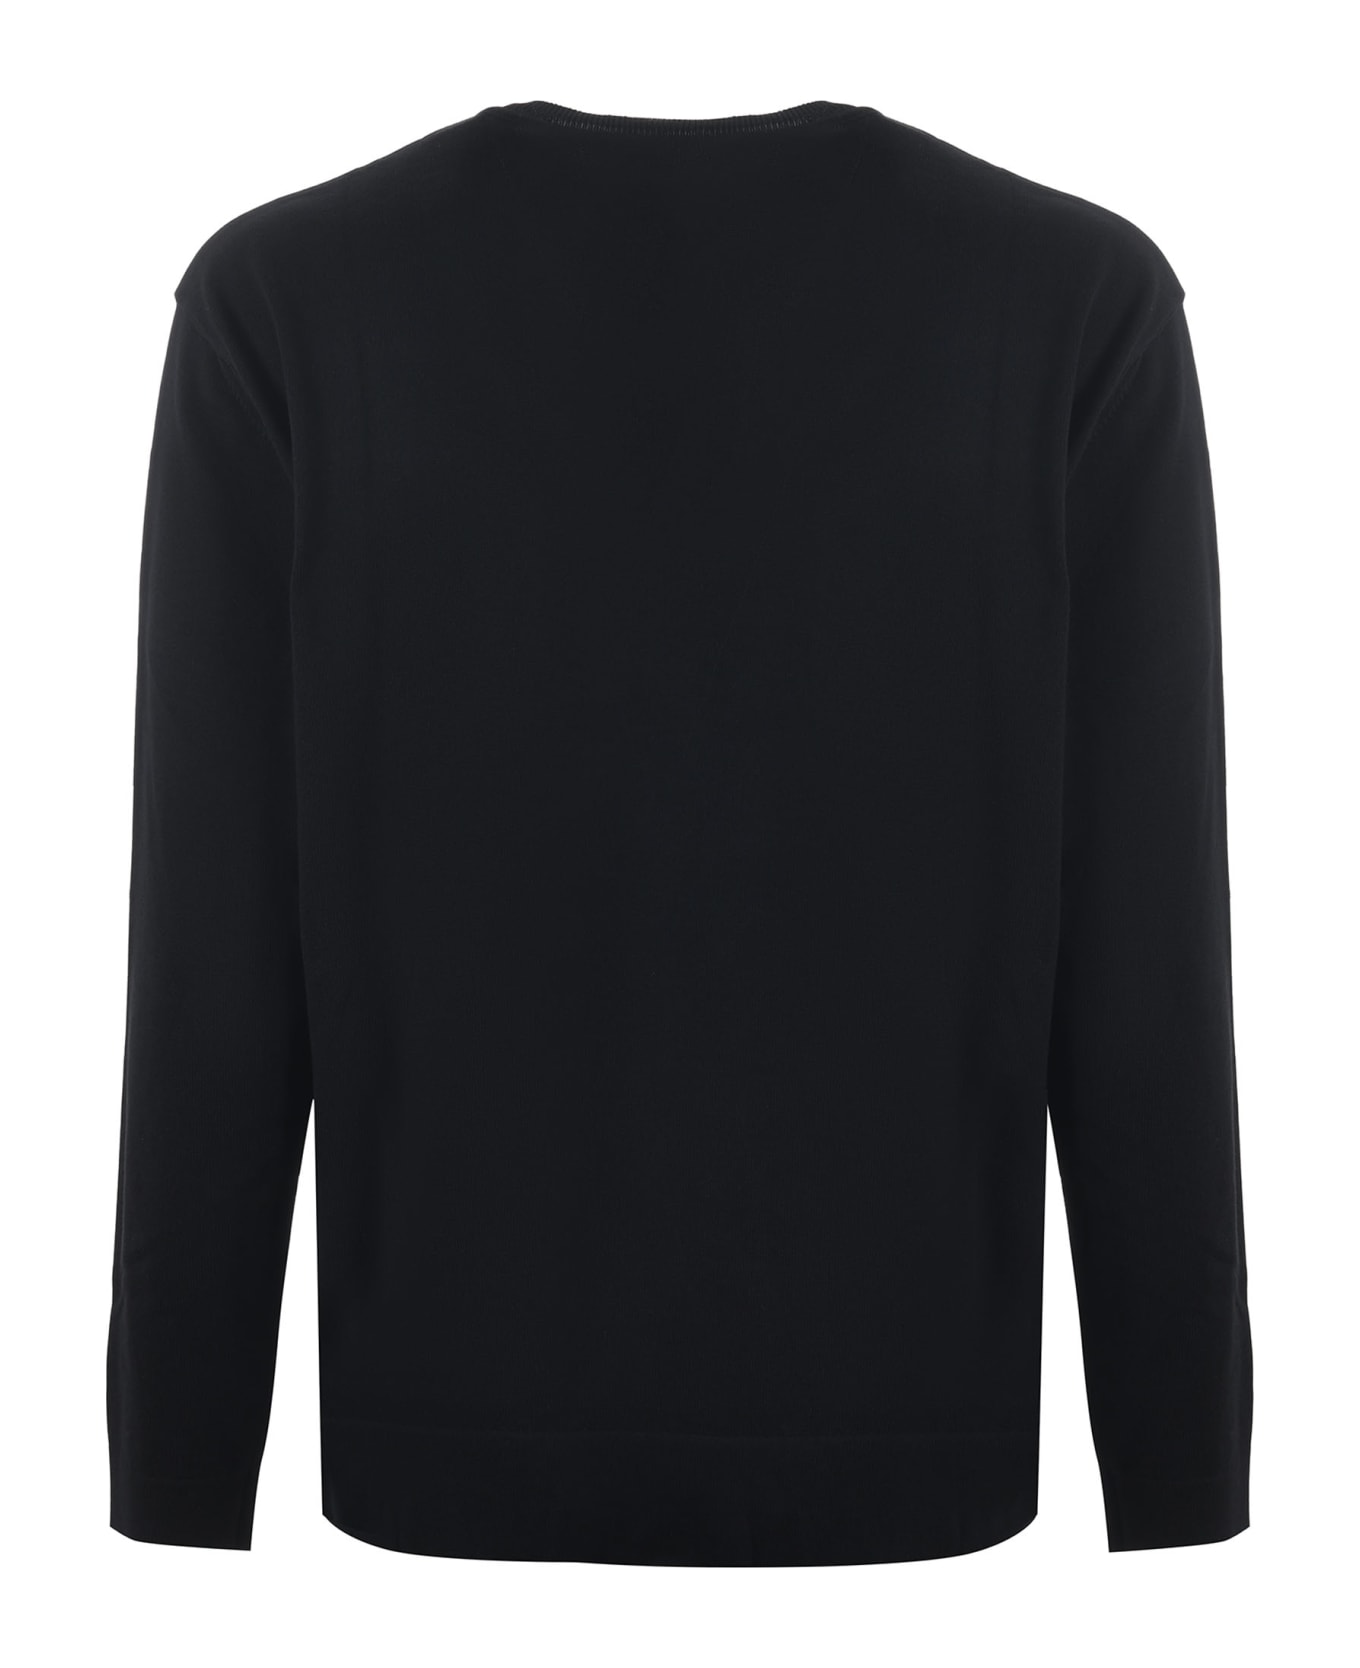 C.P. Company Sweater - Nero ニットウェア